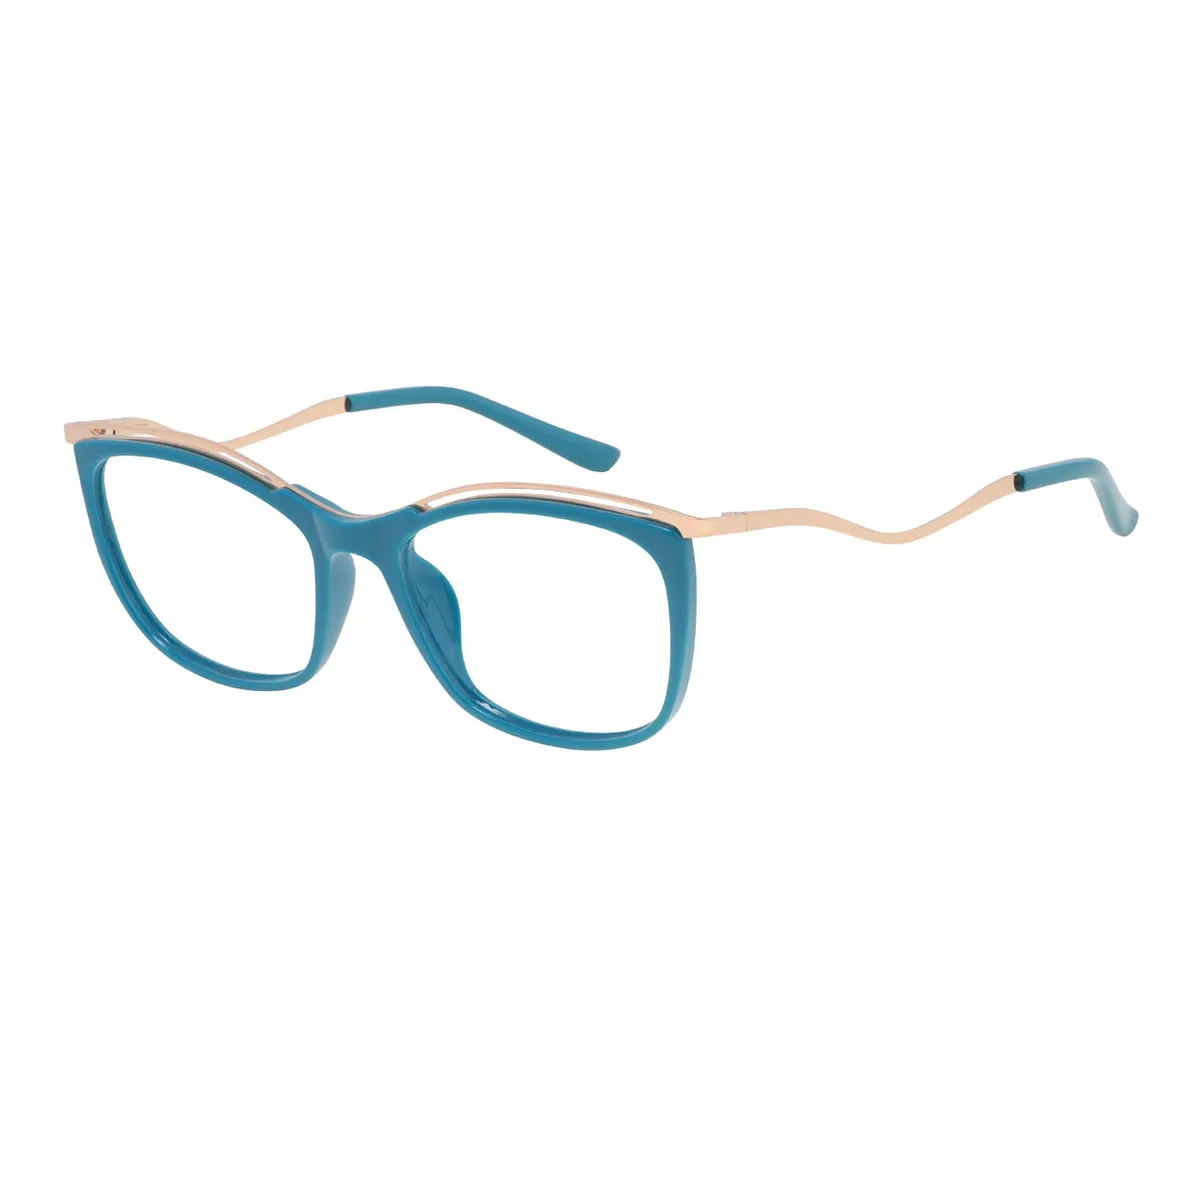 Fashion Square Blue Glasses for Women